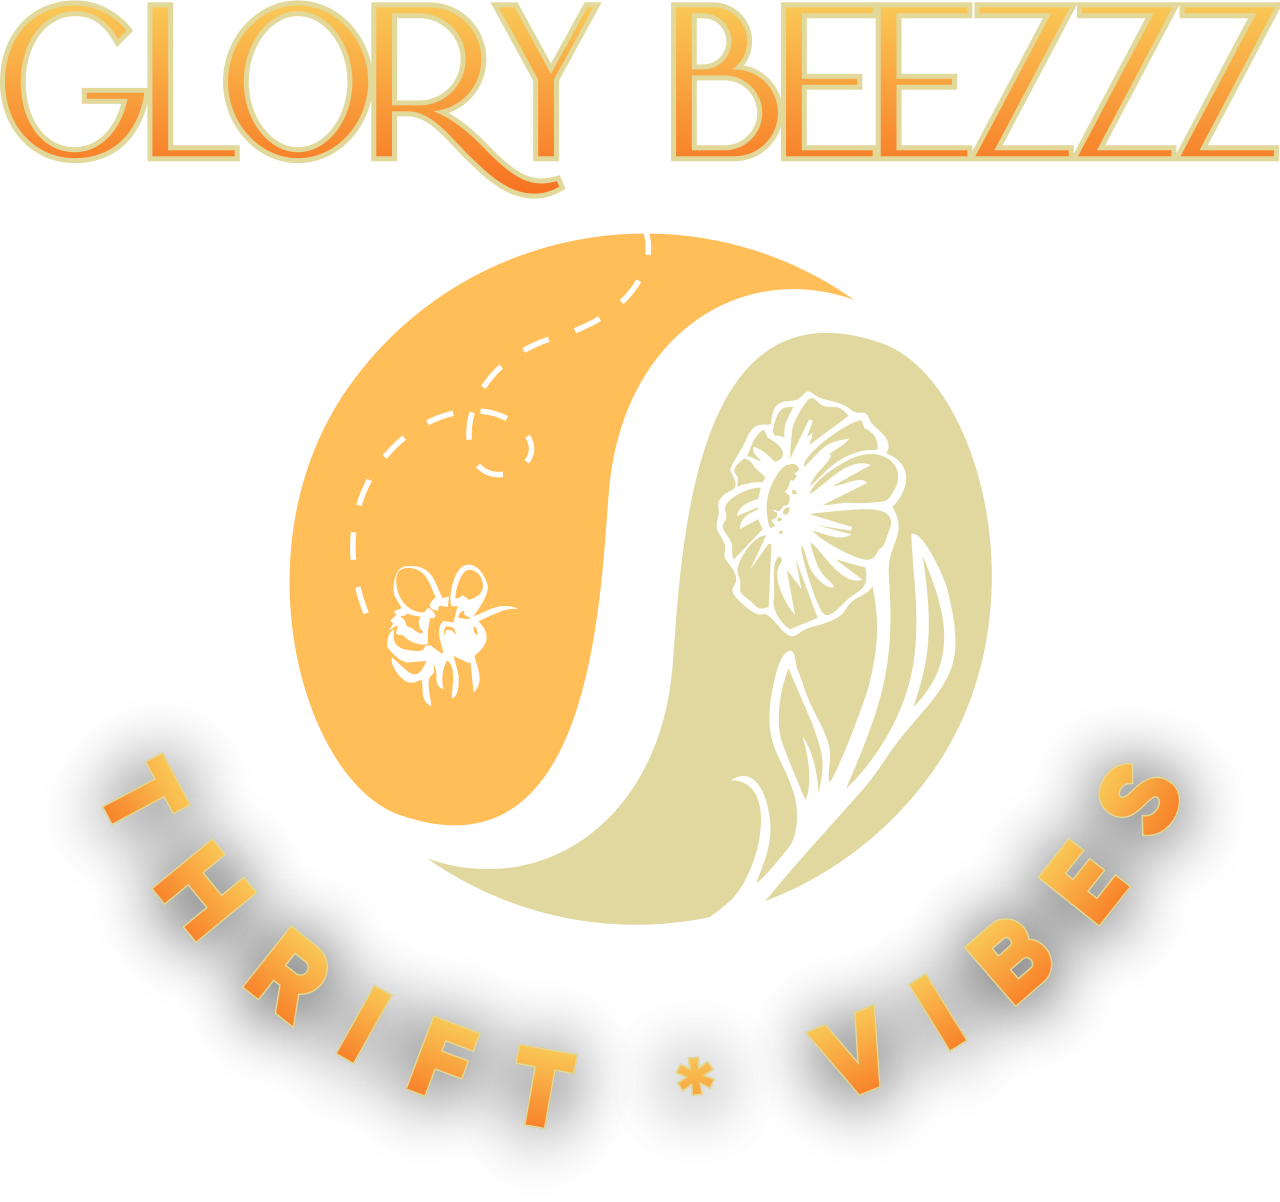 Glory Beezzz's web page